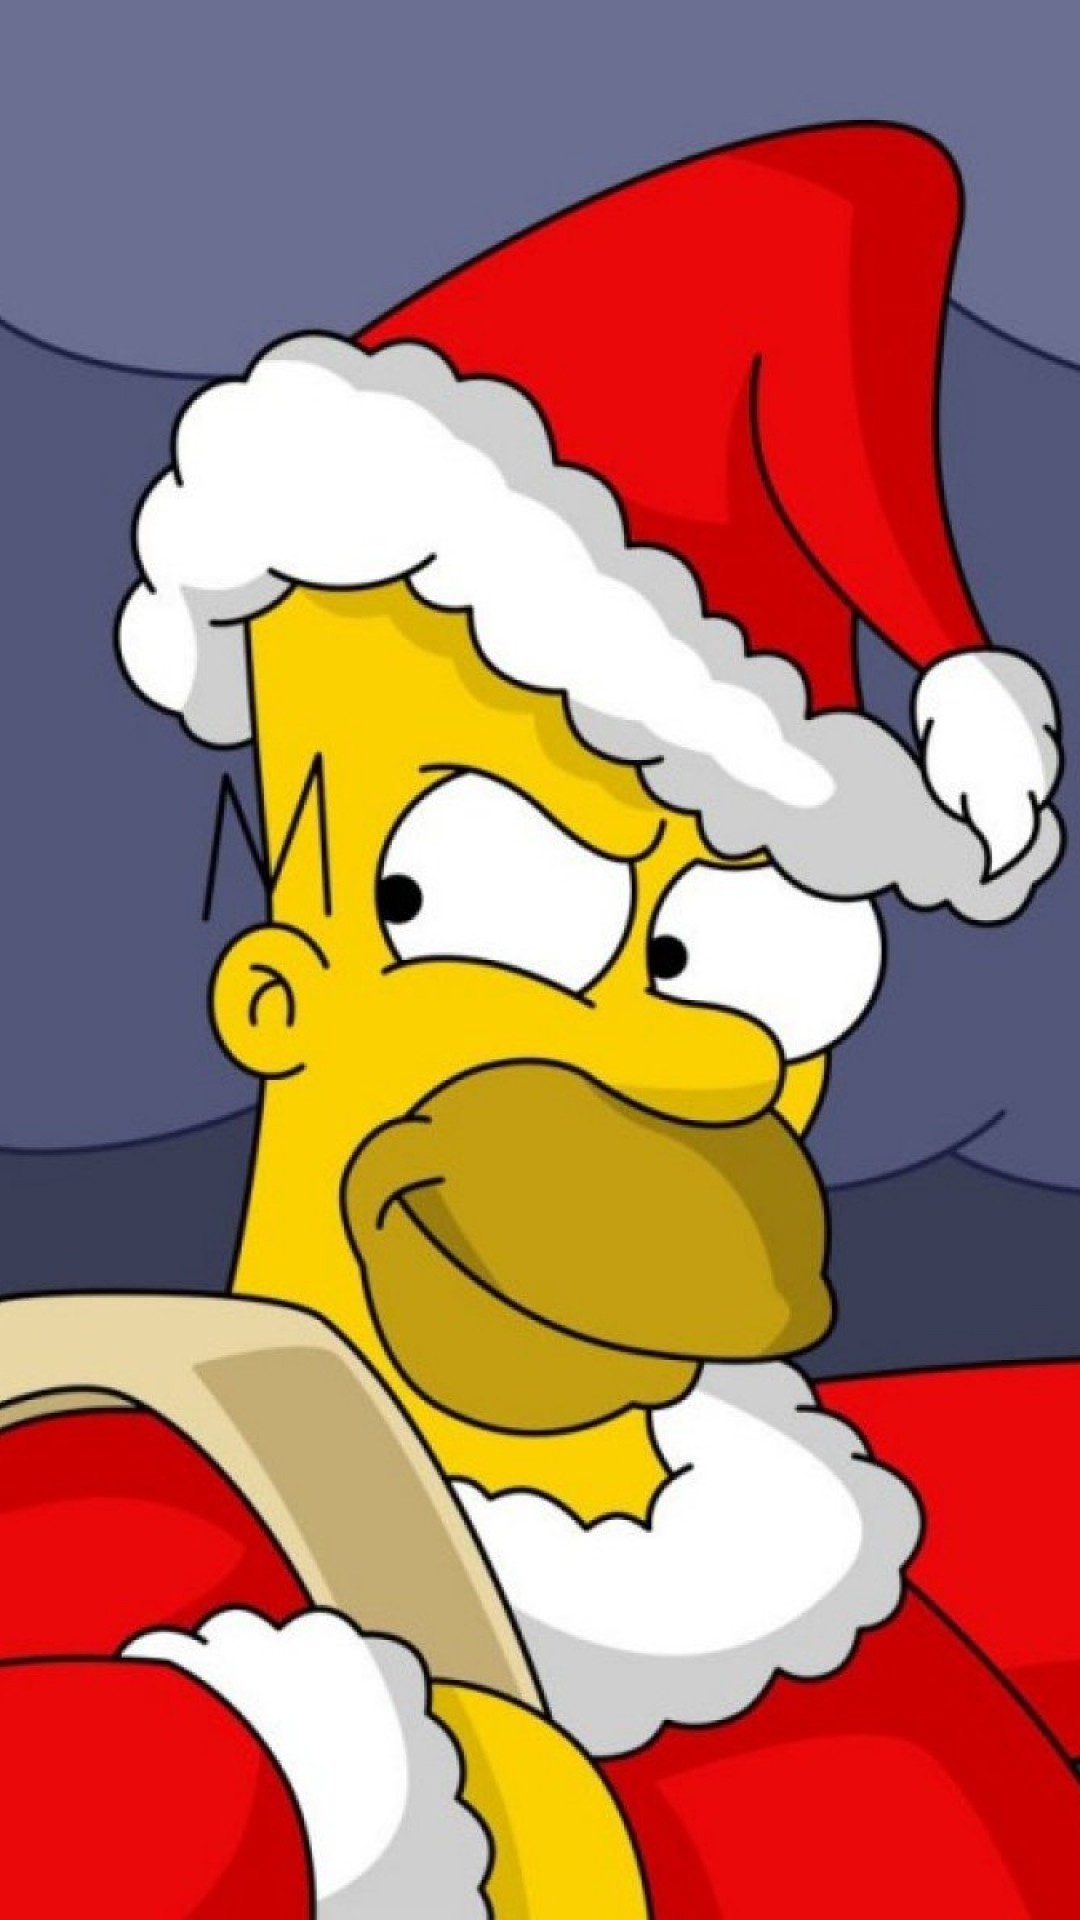 1080x1920, Wallpaper Weekends - Simpsons Christmas Wallpaper Iphone - HD Wallpaper 